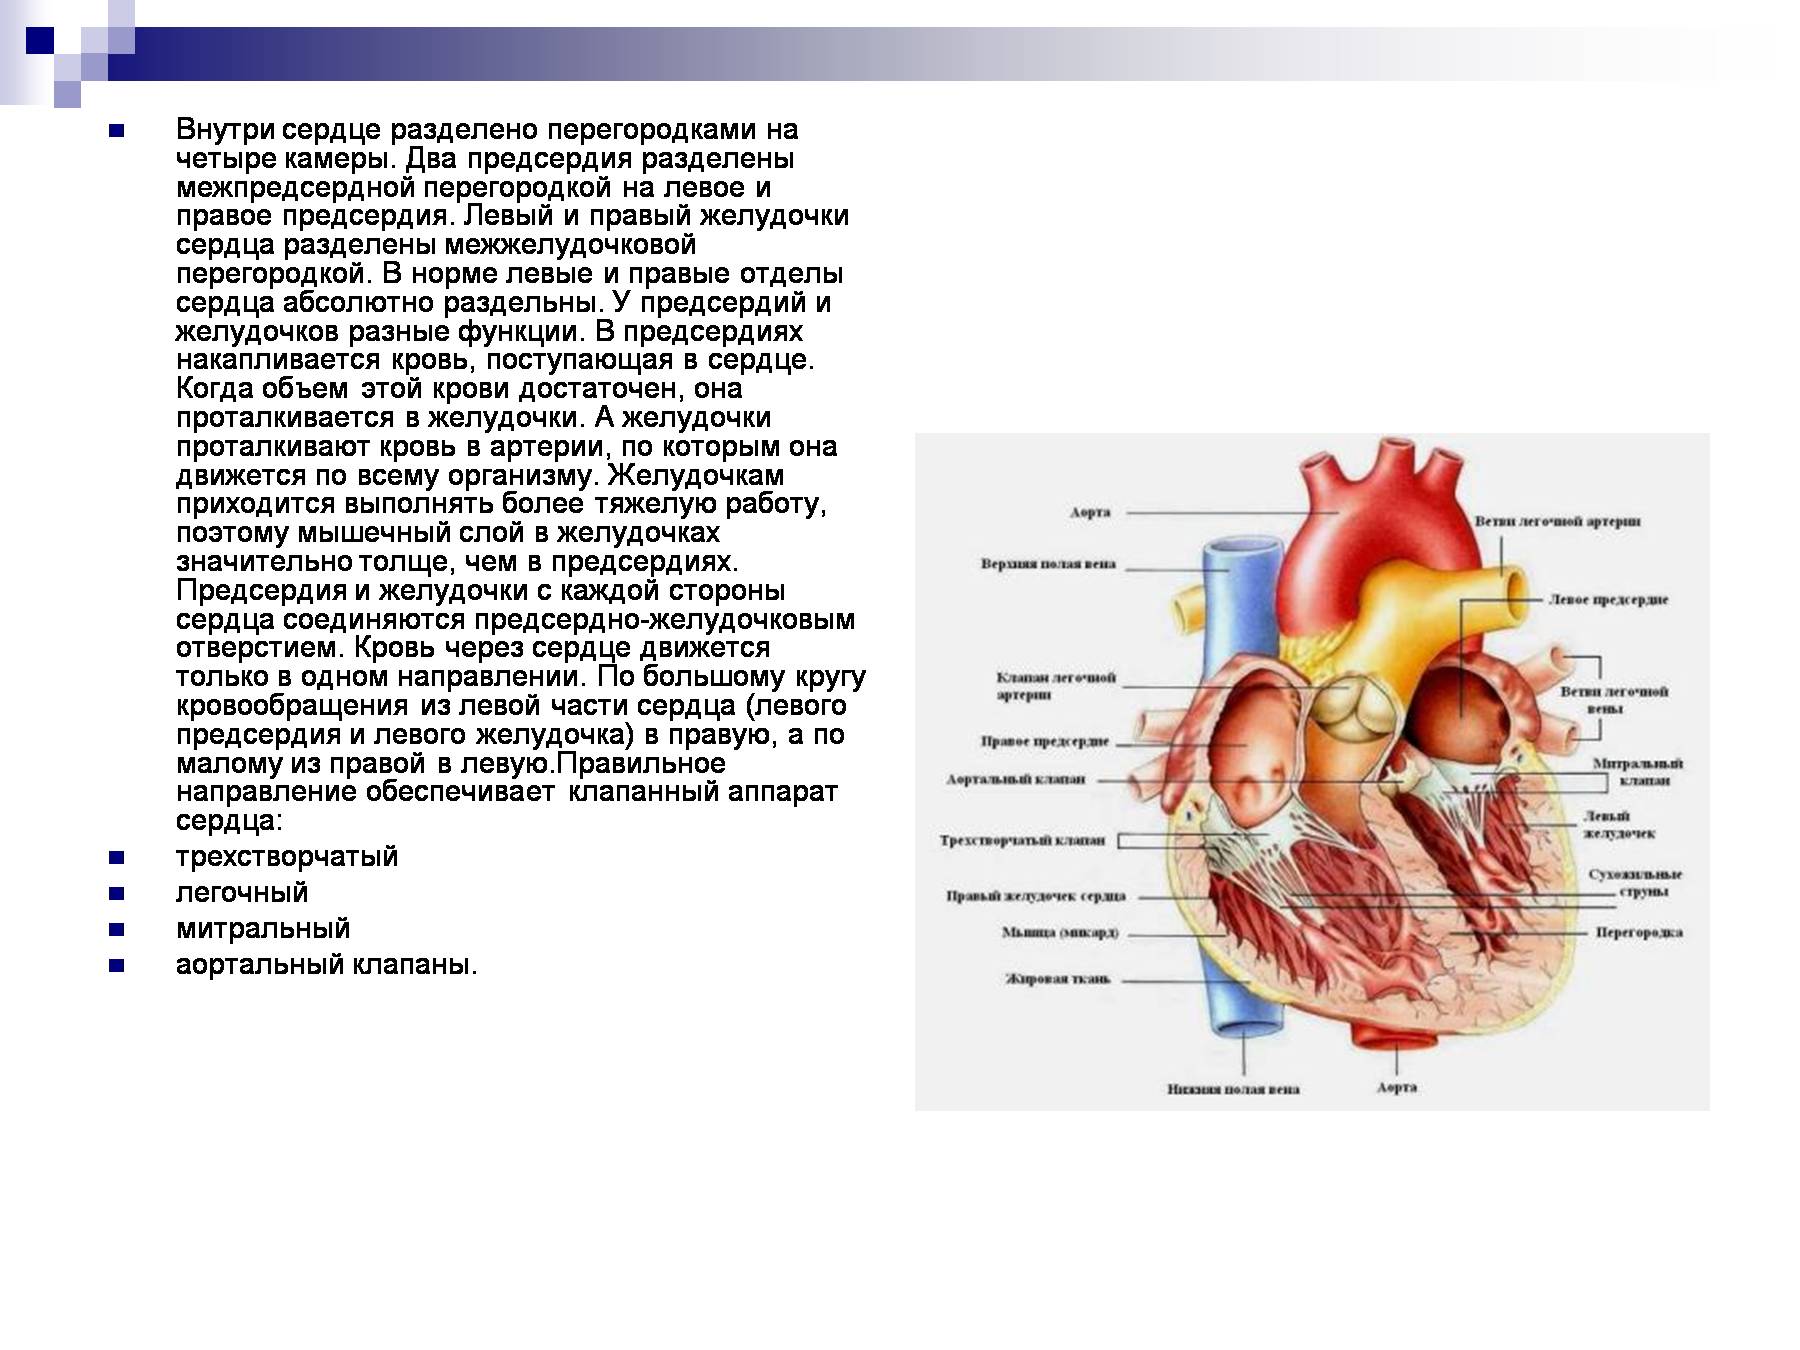 Характеристика правого предсердия. Межпредсердная перегородка сердца строение. Строение межпредсердной перегородки сердца. Перегородка предсердий и желудочков сердца. Расширение левого предсердия (объем 88 мл).